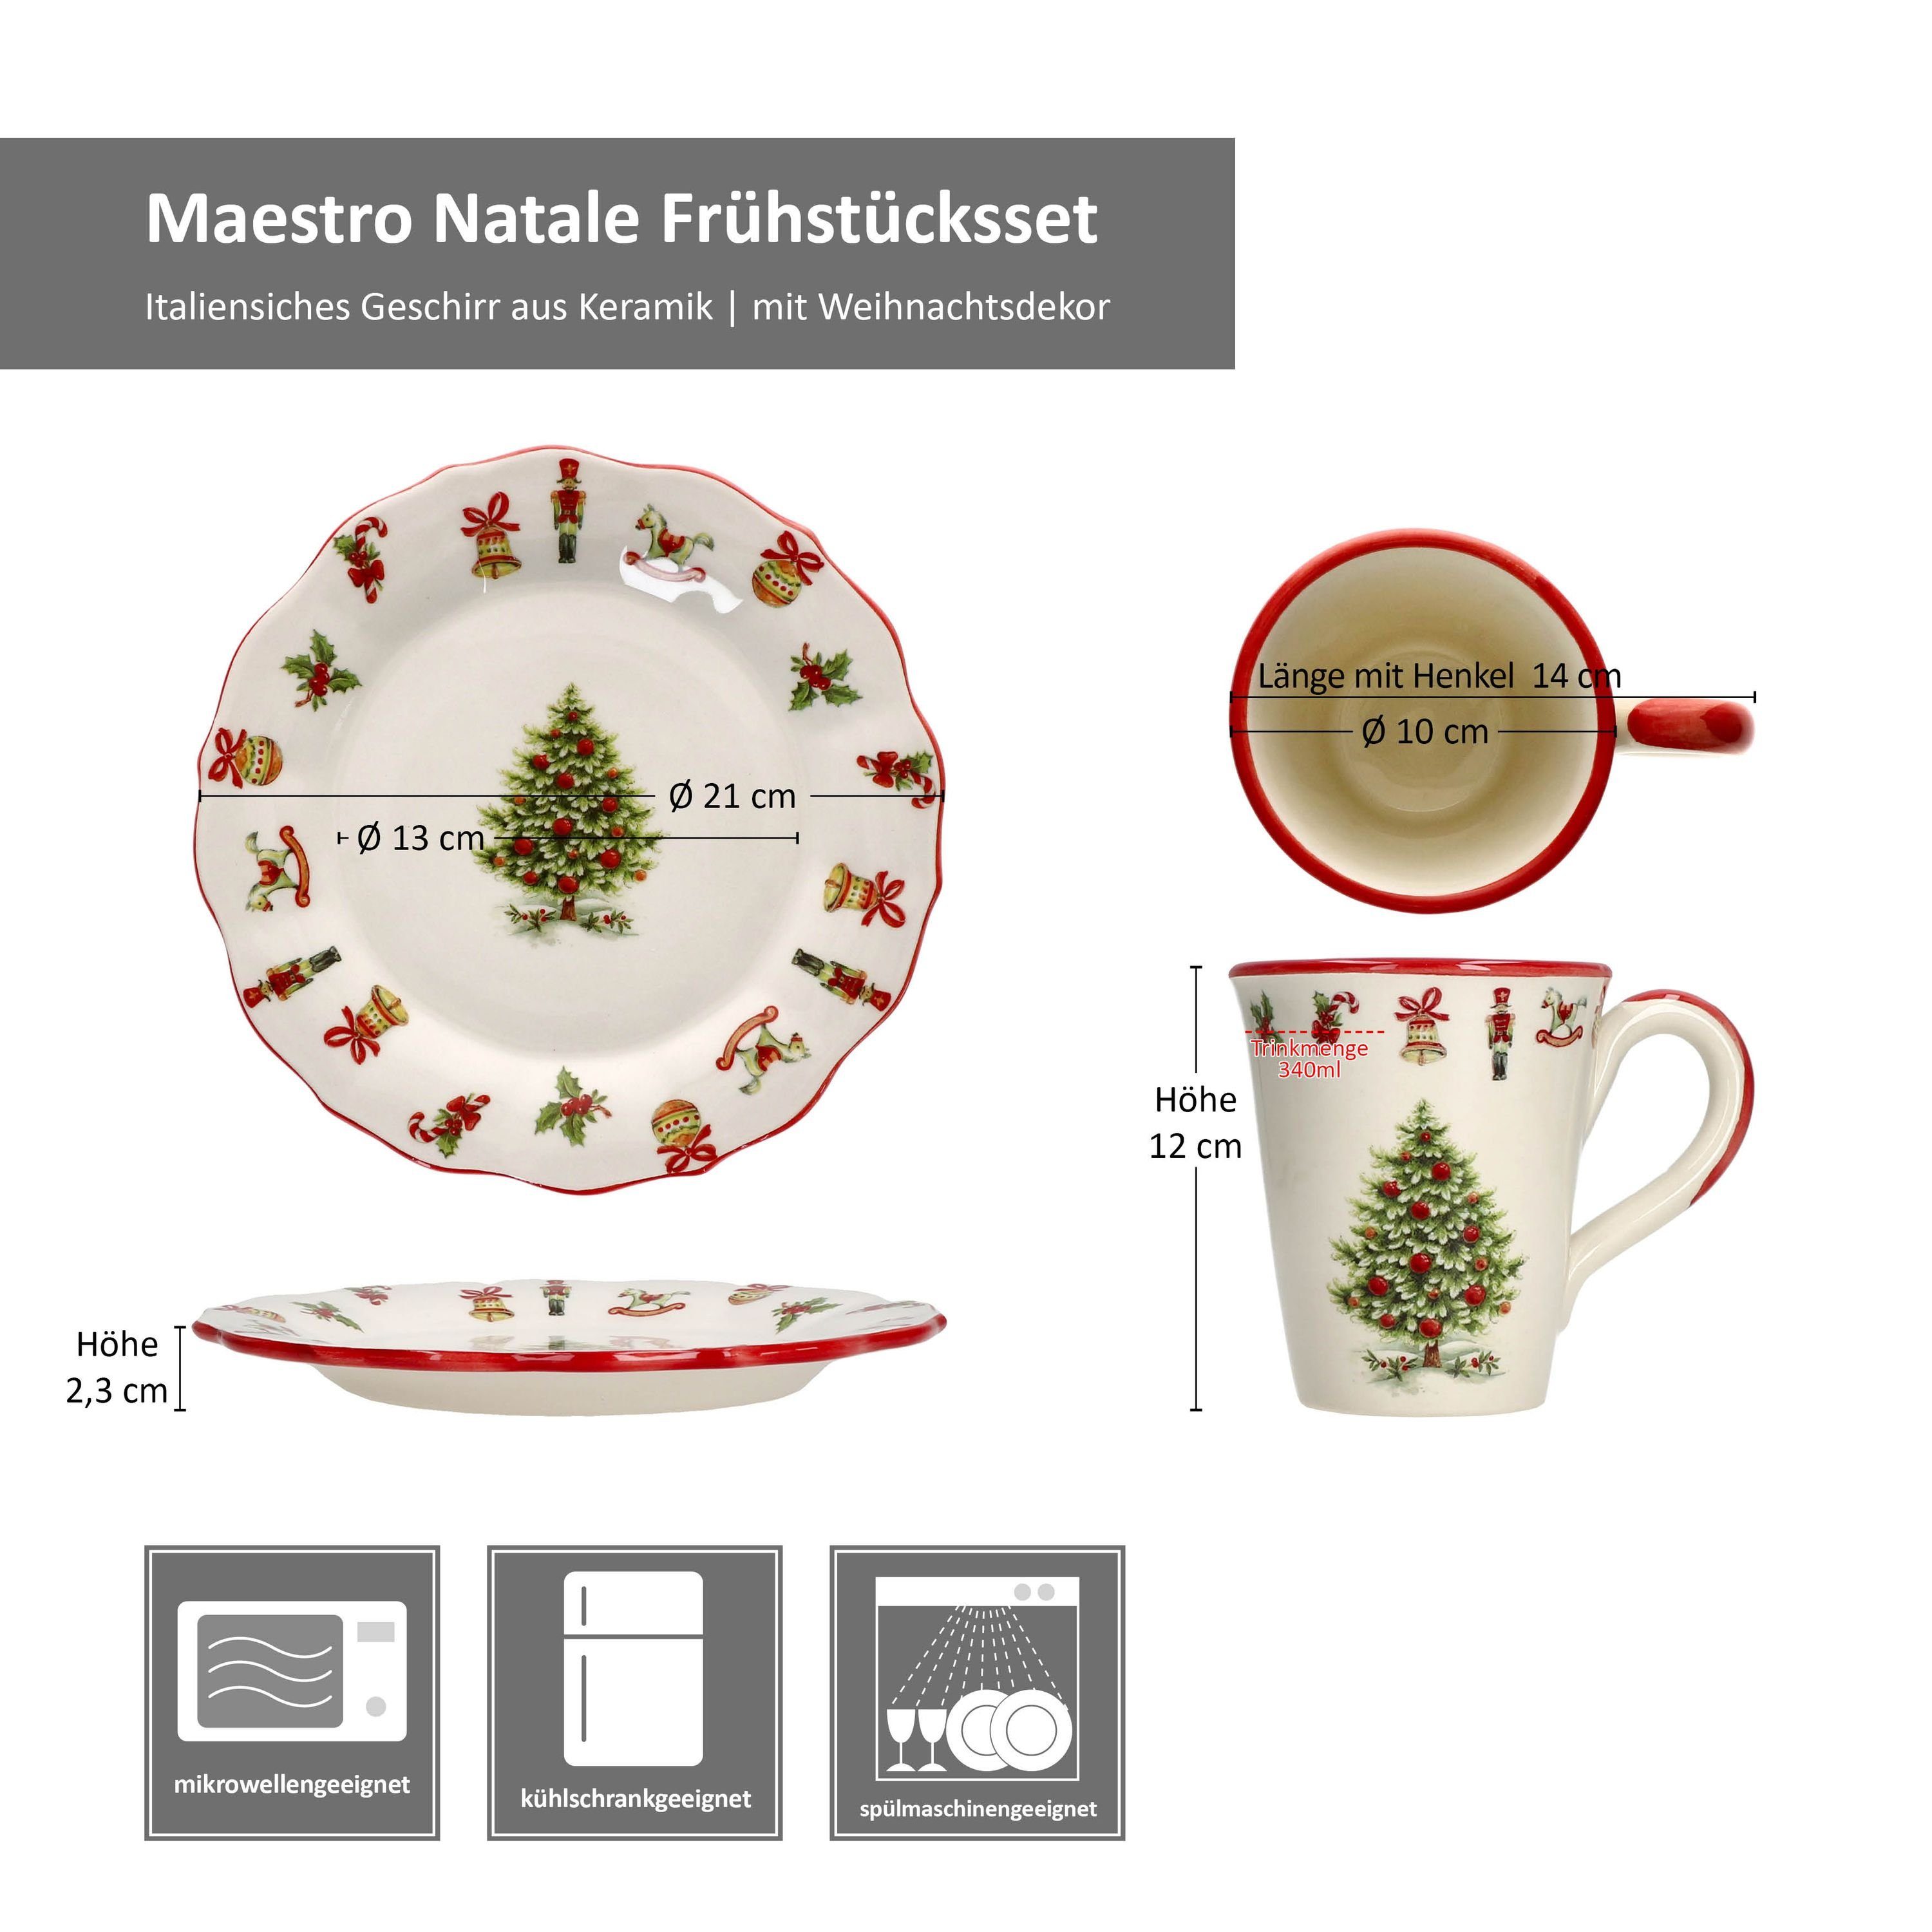 MamboCat Frühstücks-Geschirrset Maestro Natale 2 Keramik Frühstücksset 4tlg Weihnachten, Pers Keramik Teller